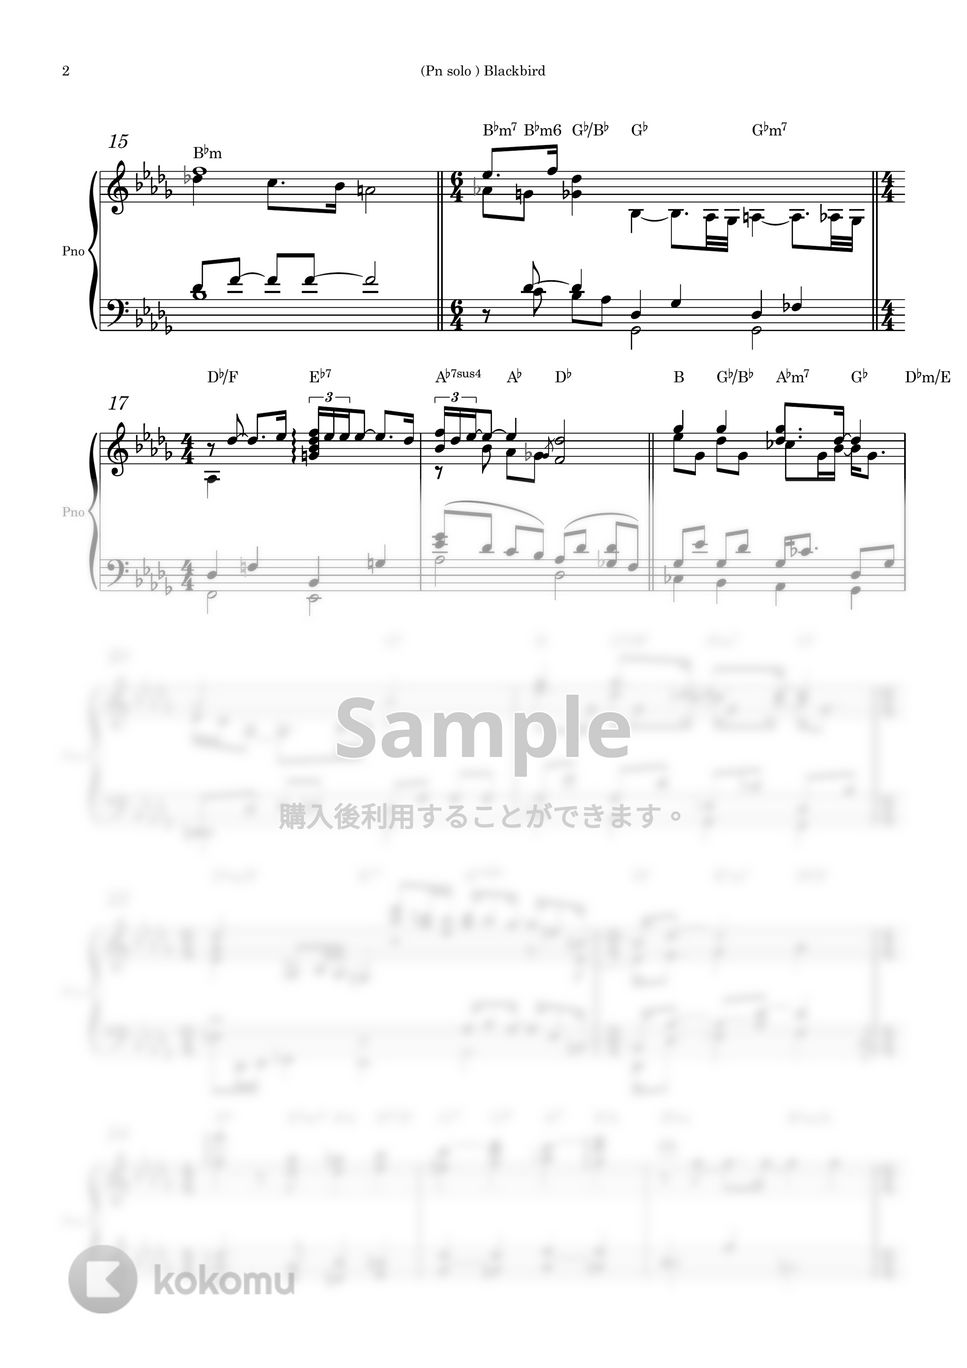 Paul McCartney - Blackbird (ピアノソロ) by Piano QQQ